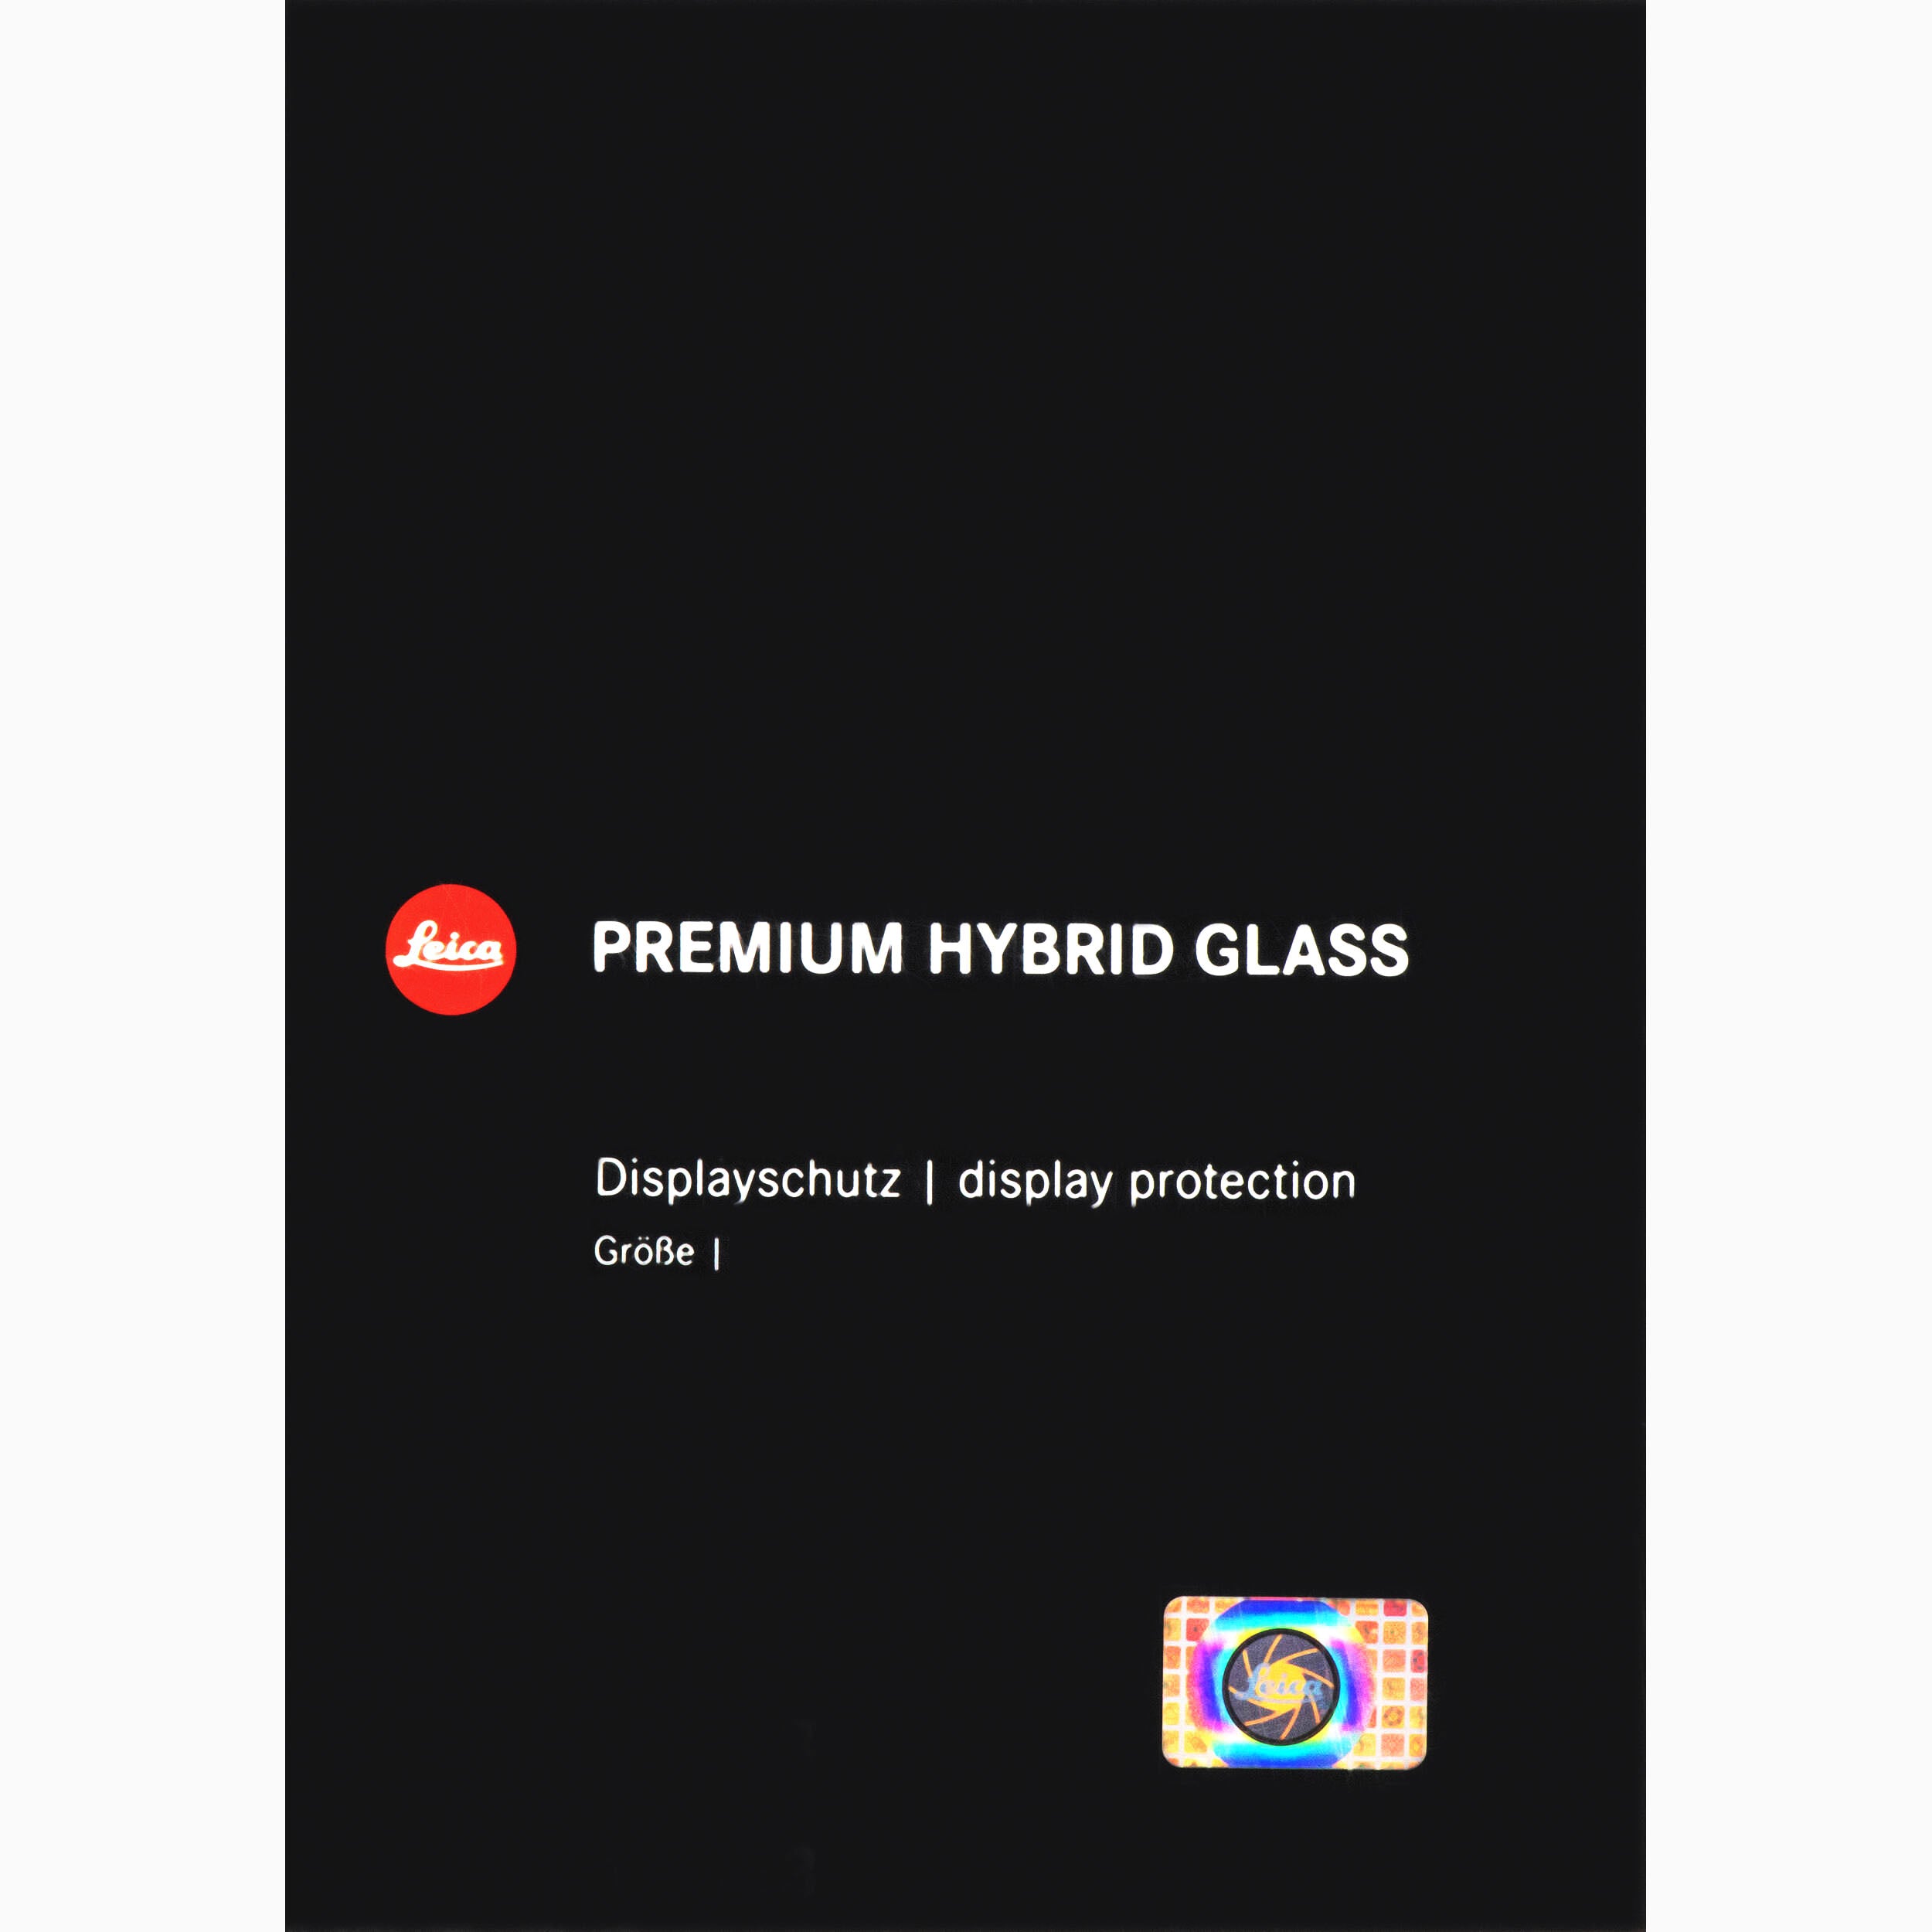 Leica Premium Hybrid Glass - Size 4 for M11